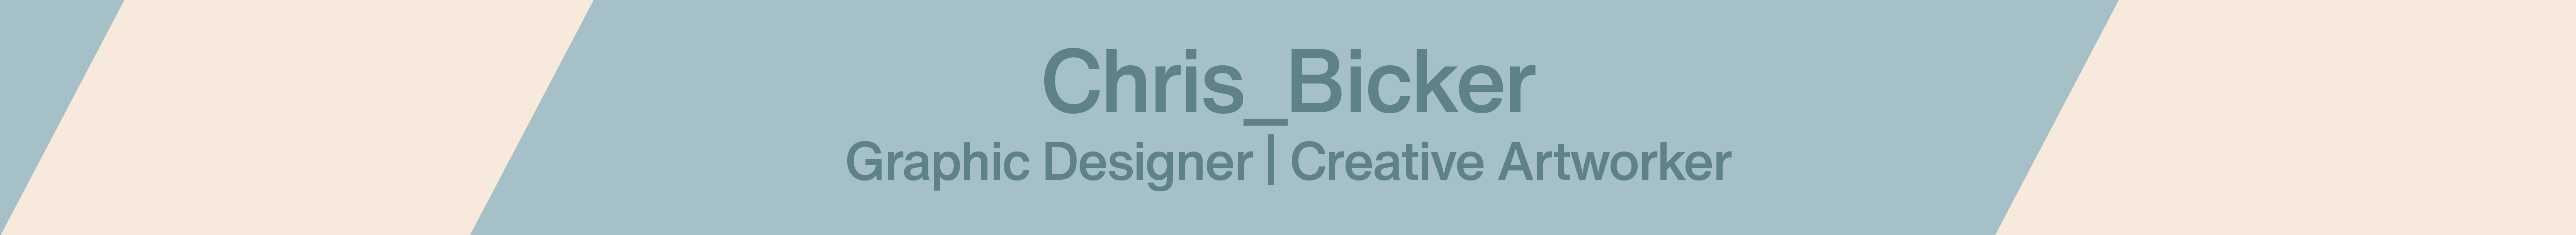 Chris Bicker's profile banner